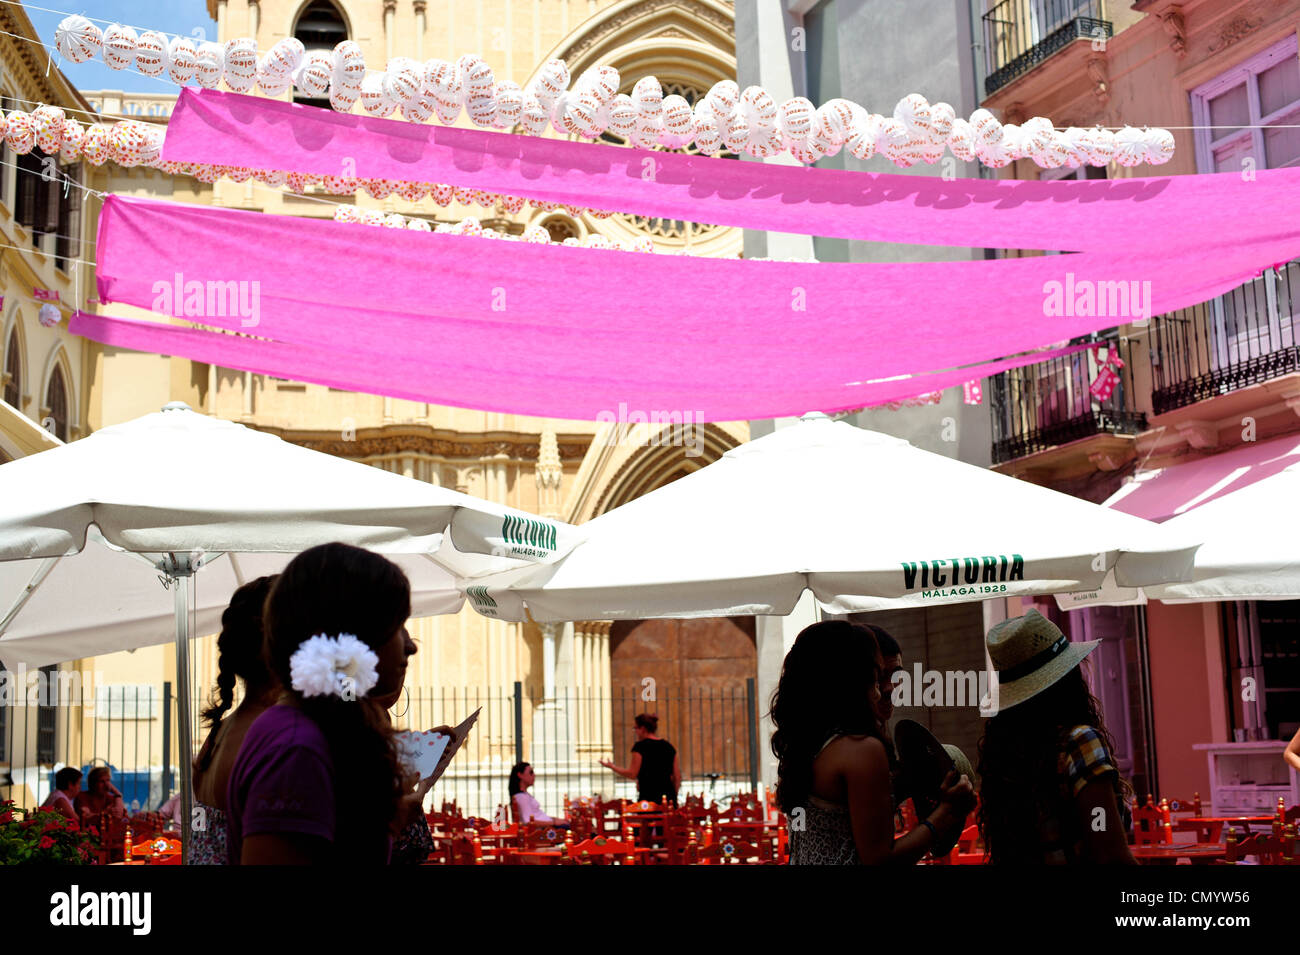 Feria (Fair) de Malaga, Spain, 2011 Stock Photo